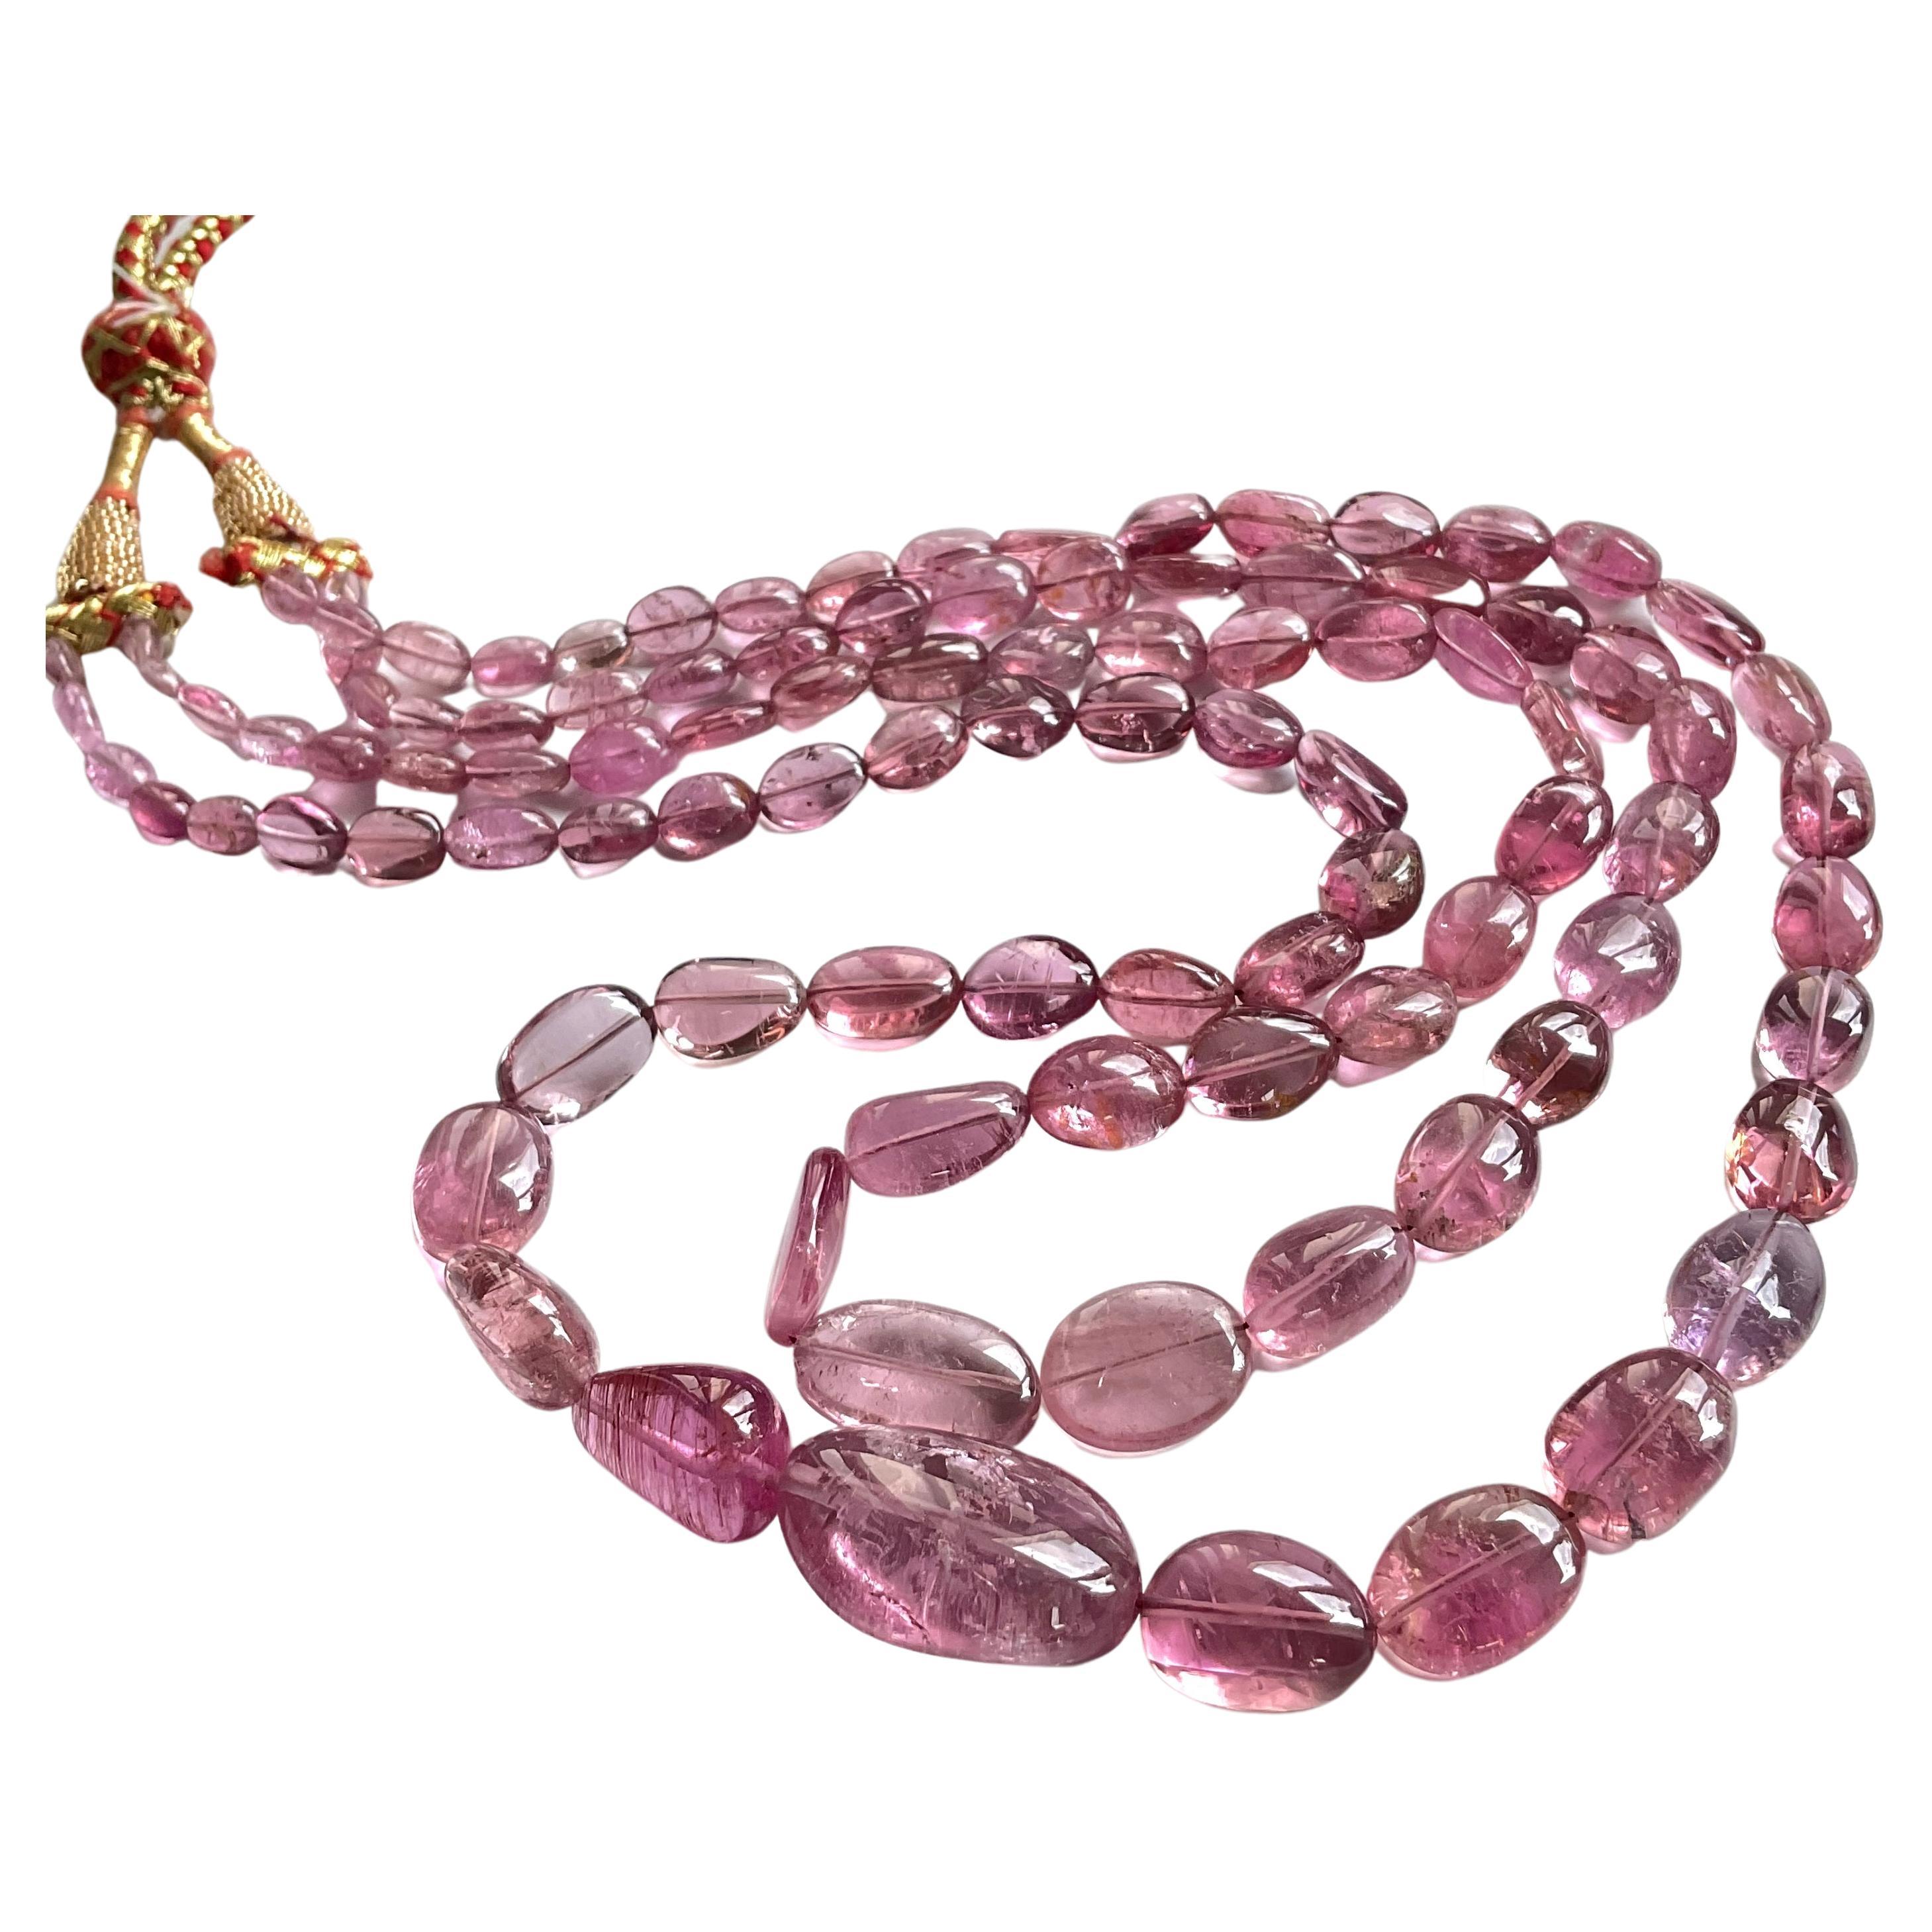 296.70 Carats Pink Tourmaline Plain Tumbled necklace Jewelry Natural Gemstones